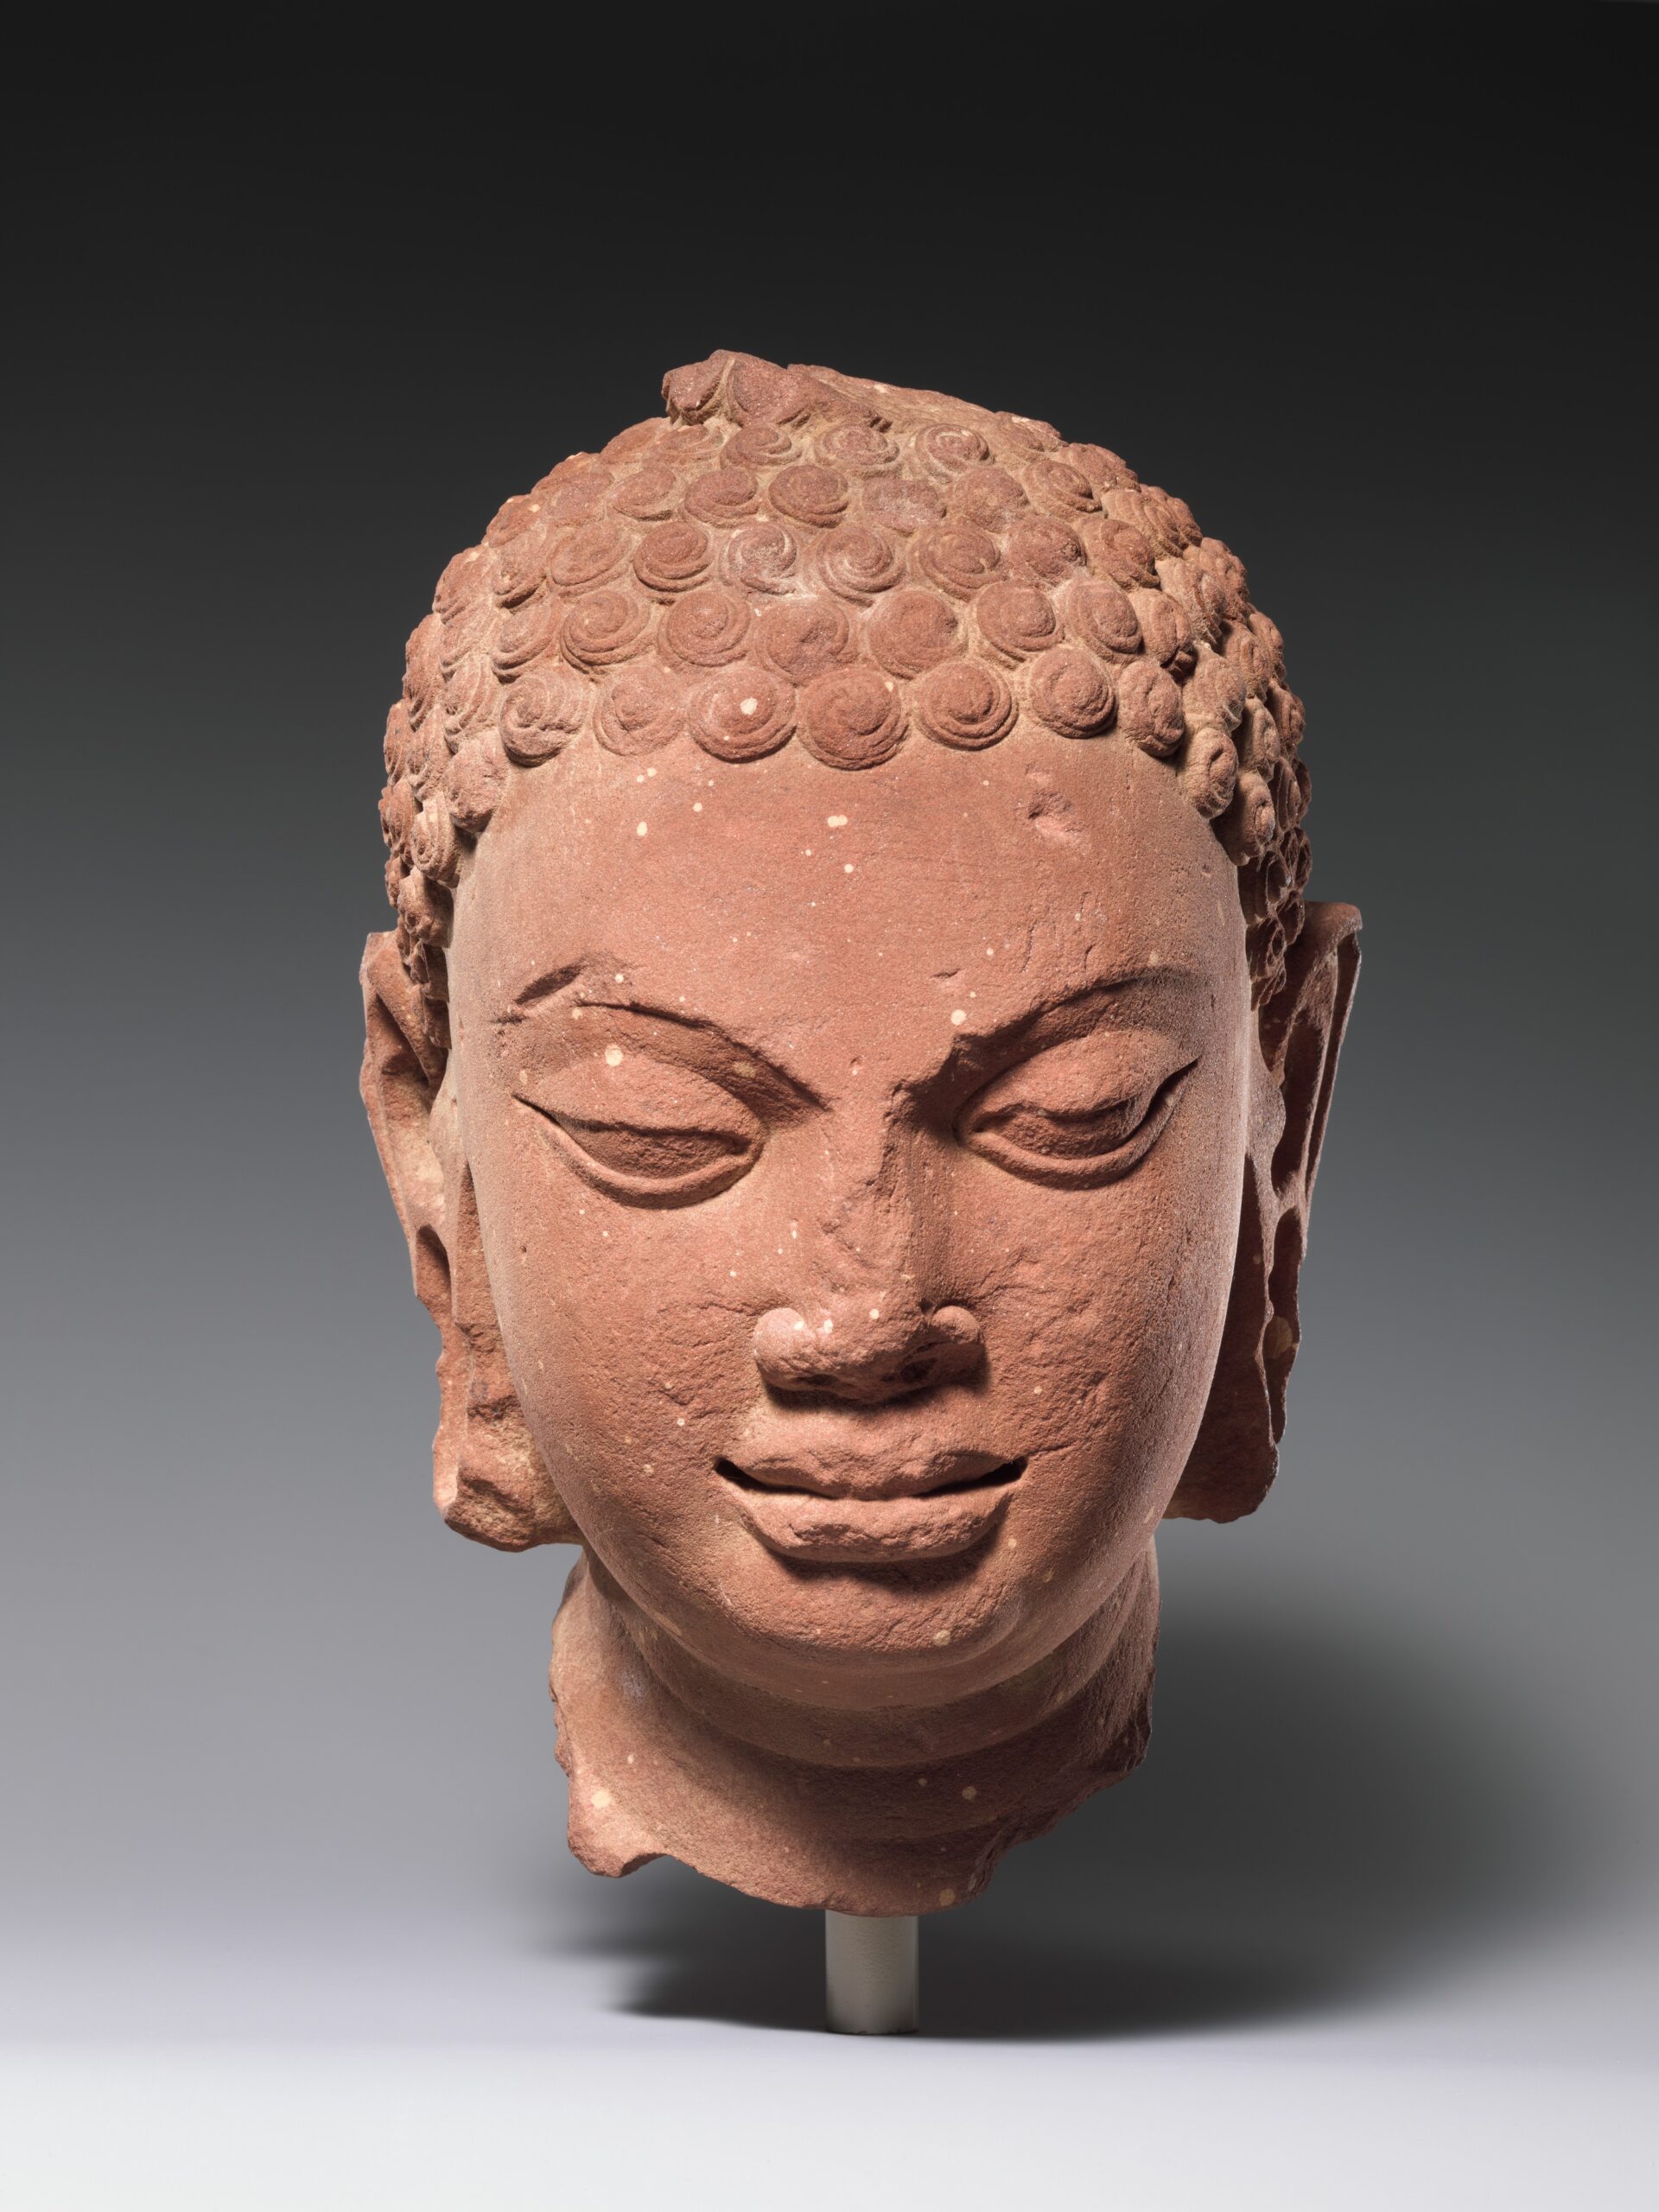 Mathura Museum houses ancient Buddhist artifacts